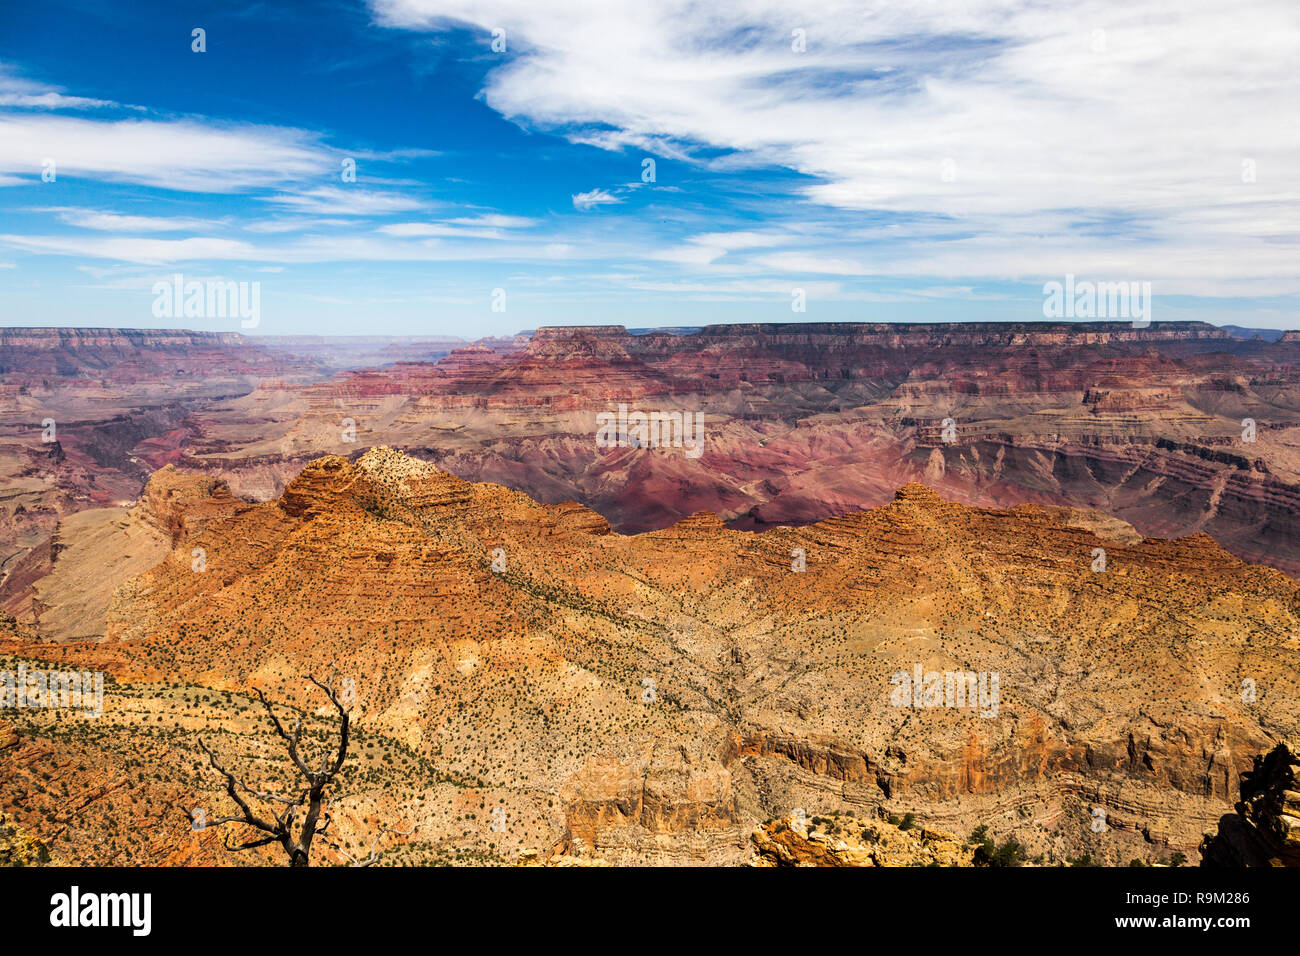 South Rim Grand Canyon scavato dal fiume Colorado in Arizona, ha fasce stratificate di red rock rivelando di milioni di anni di storia geologica. Viewp Foto Stock